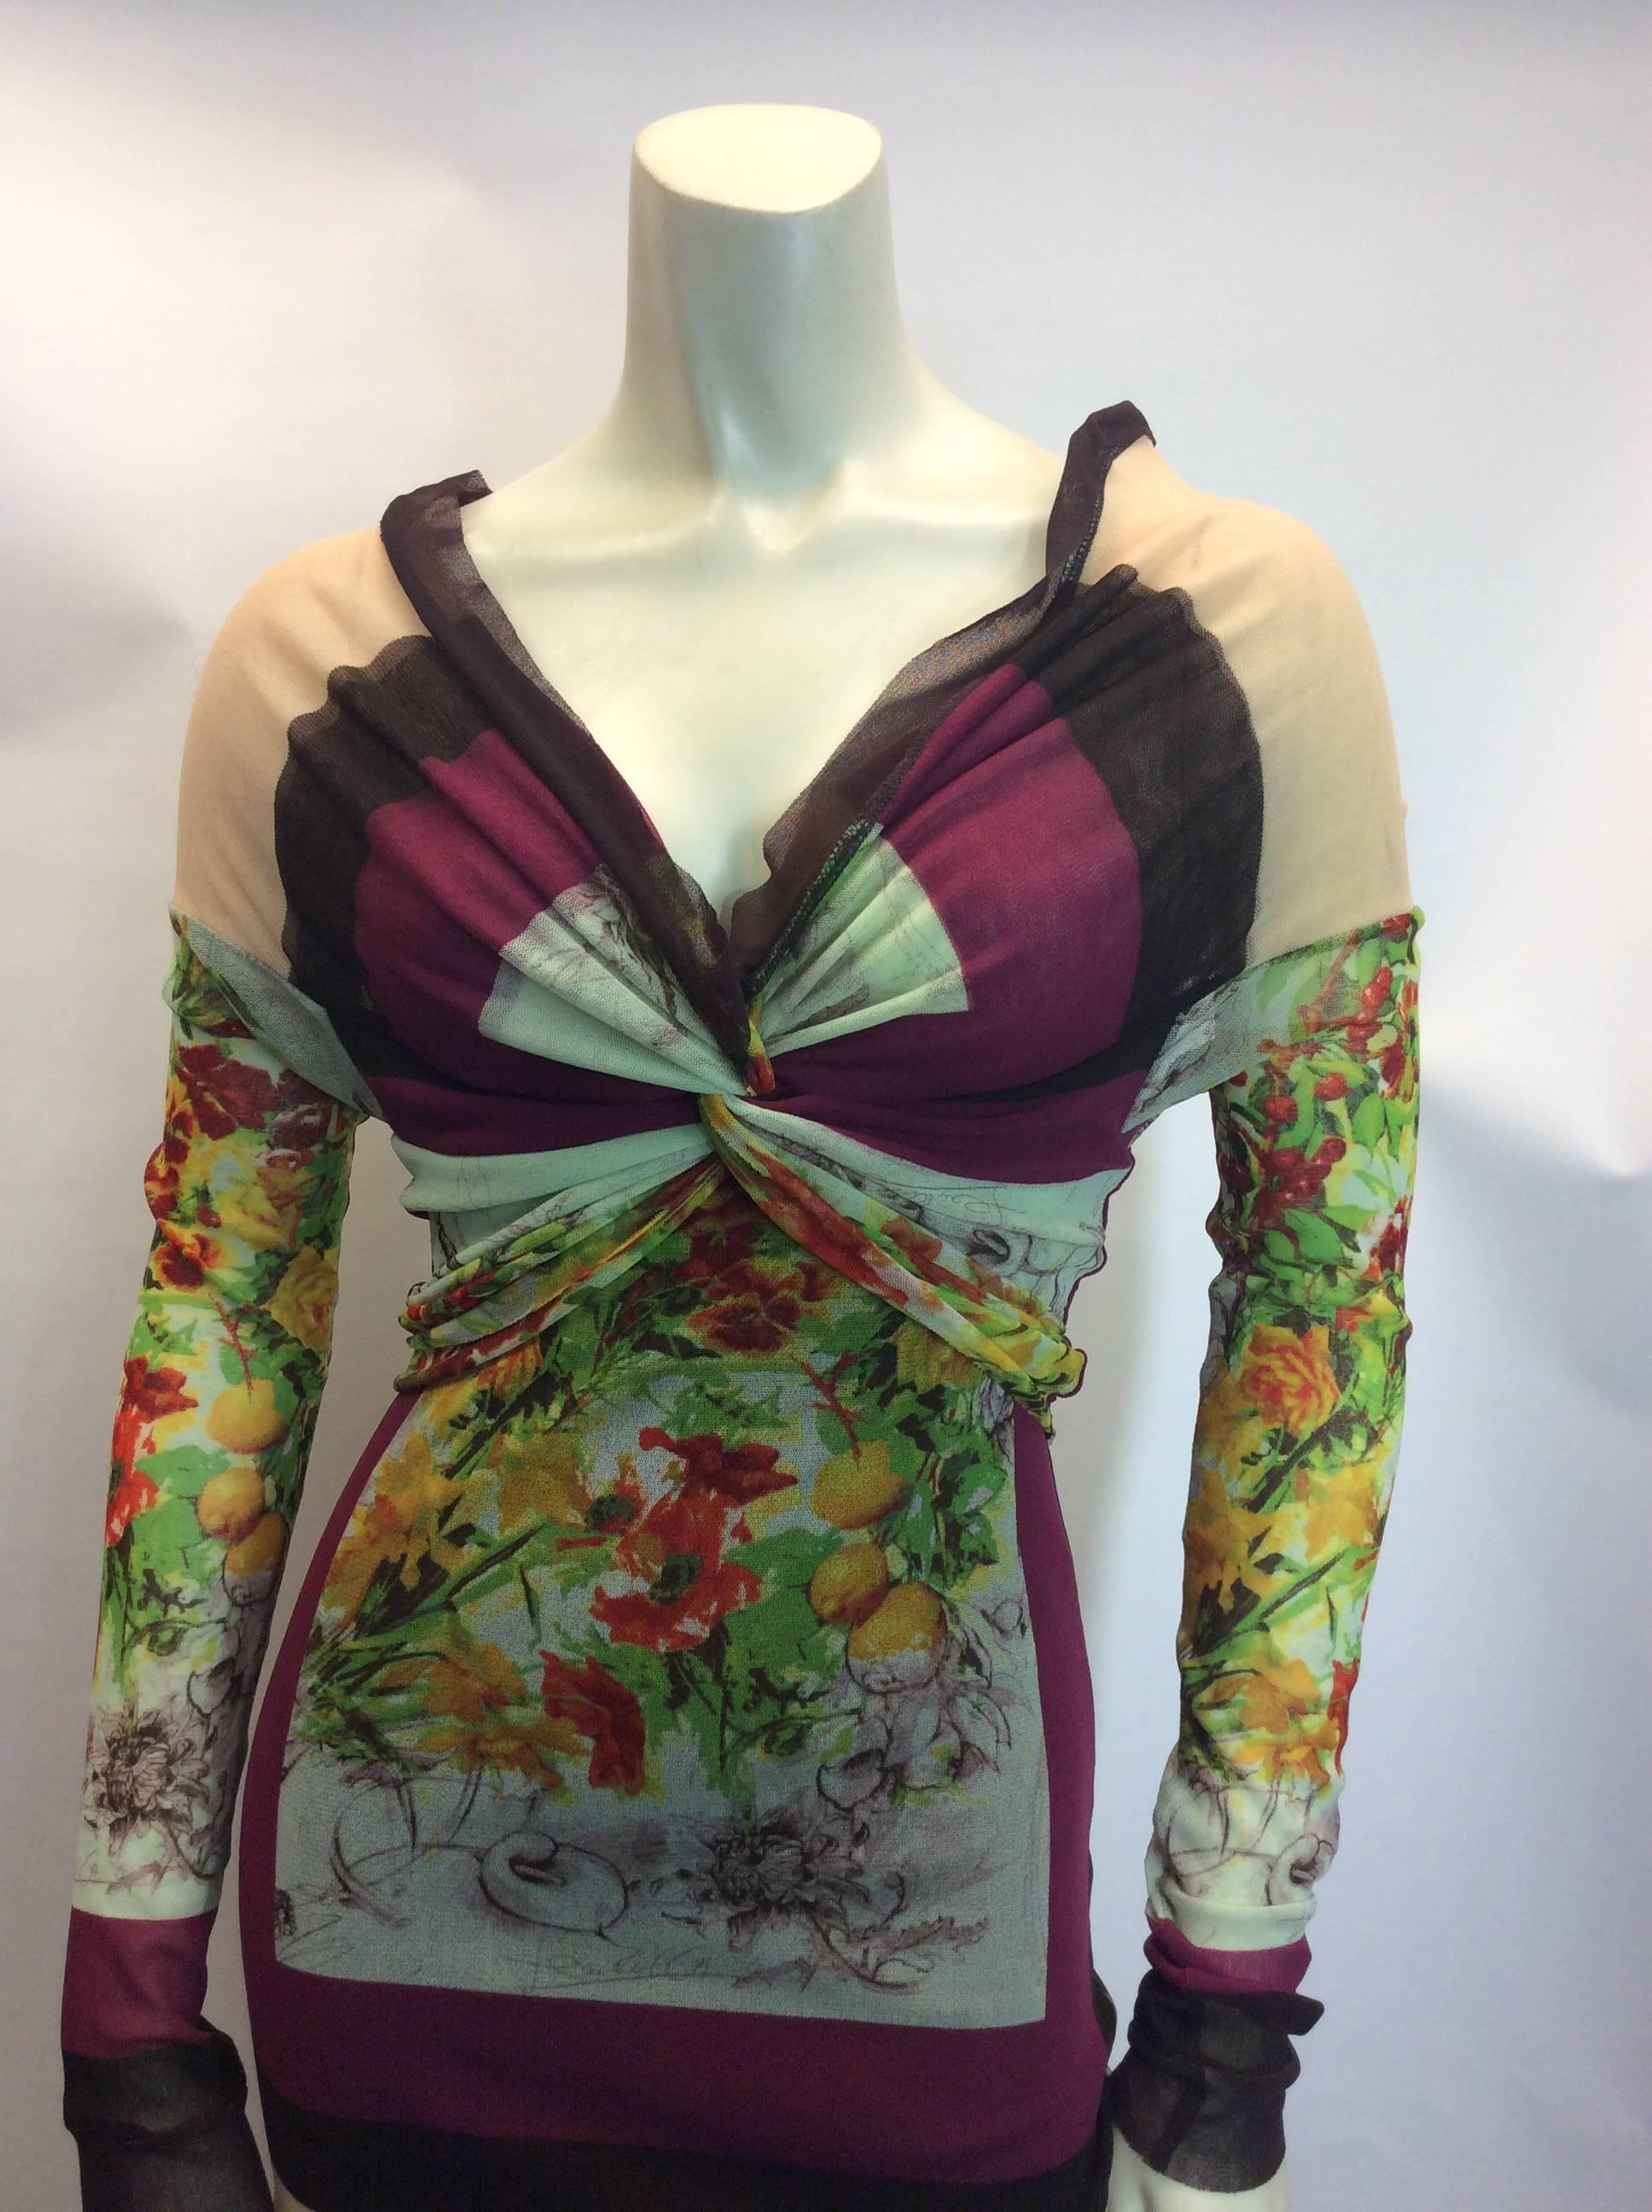 Jean Paul Gaultier Mesh Printed Maxi Dress
Drop waist cut, maxi length
Double lined
$499
Beautiful colors and print